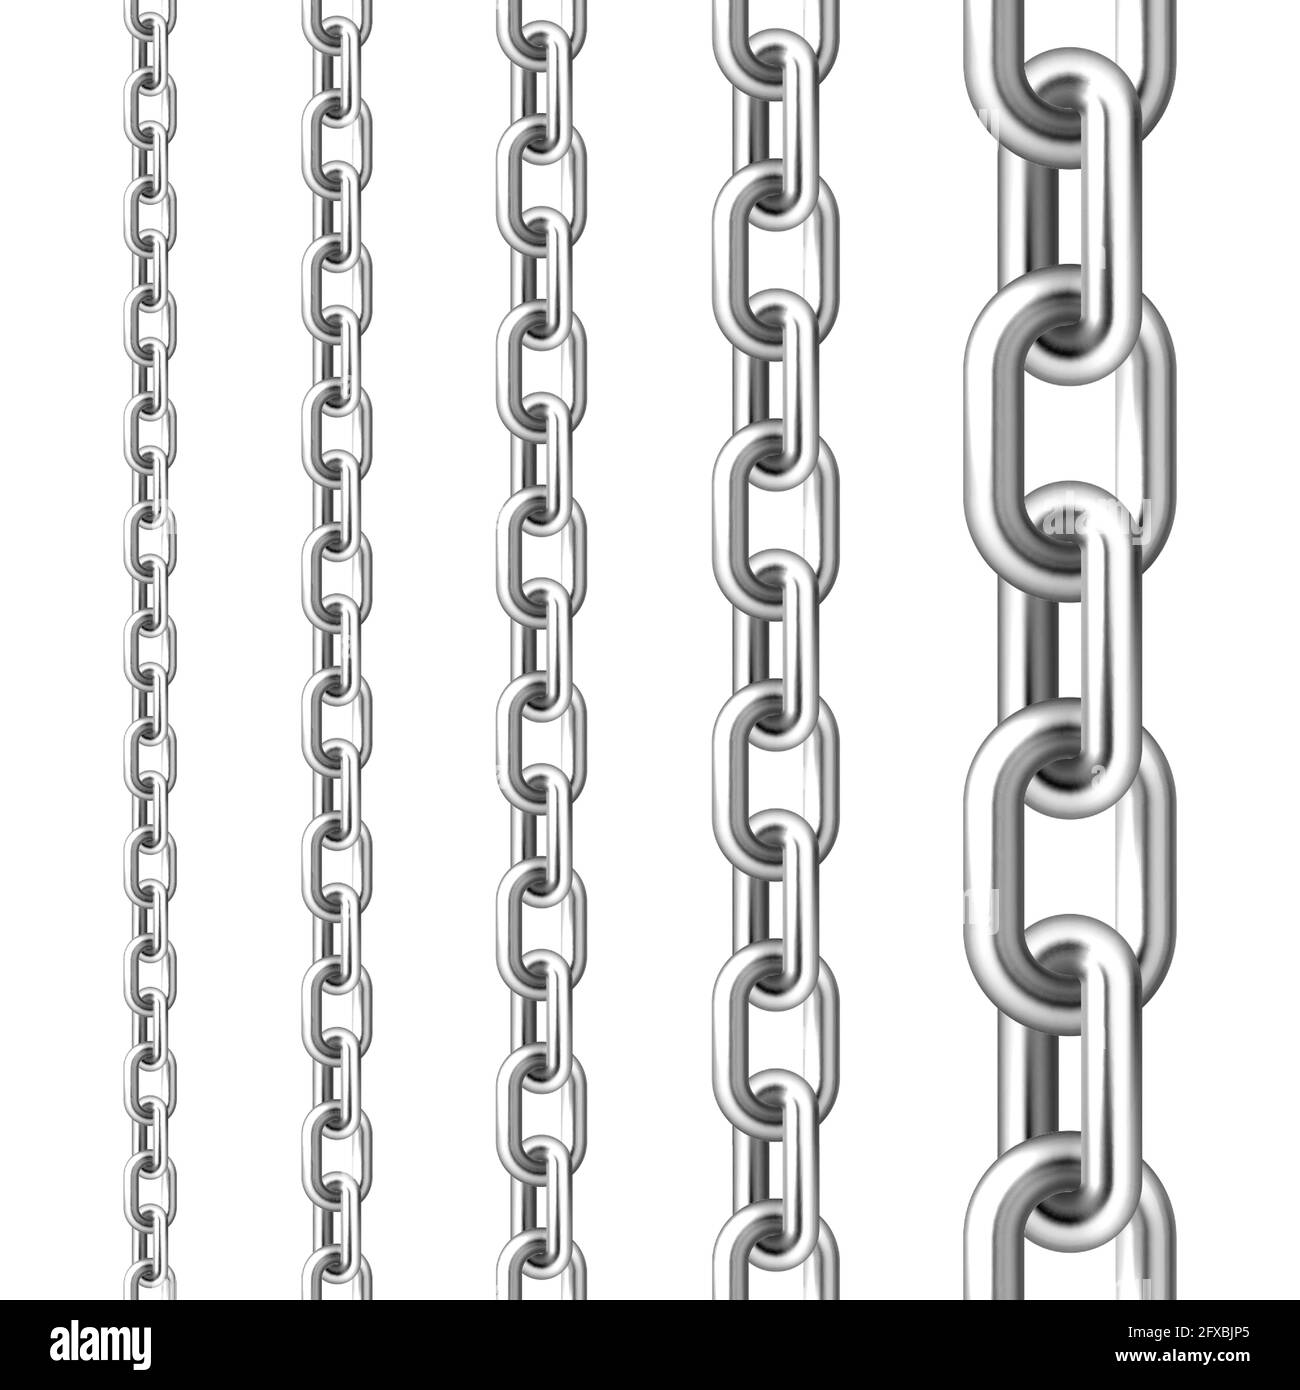 Metal Chain Links Illustration  Metal chain link, Chain link, Metal chain